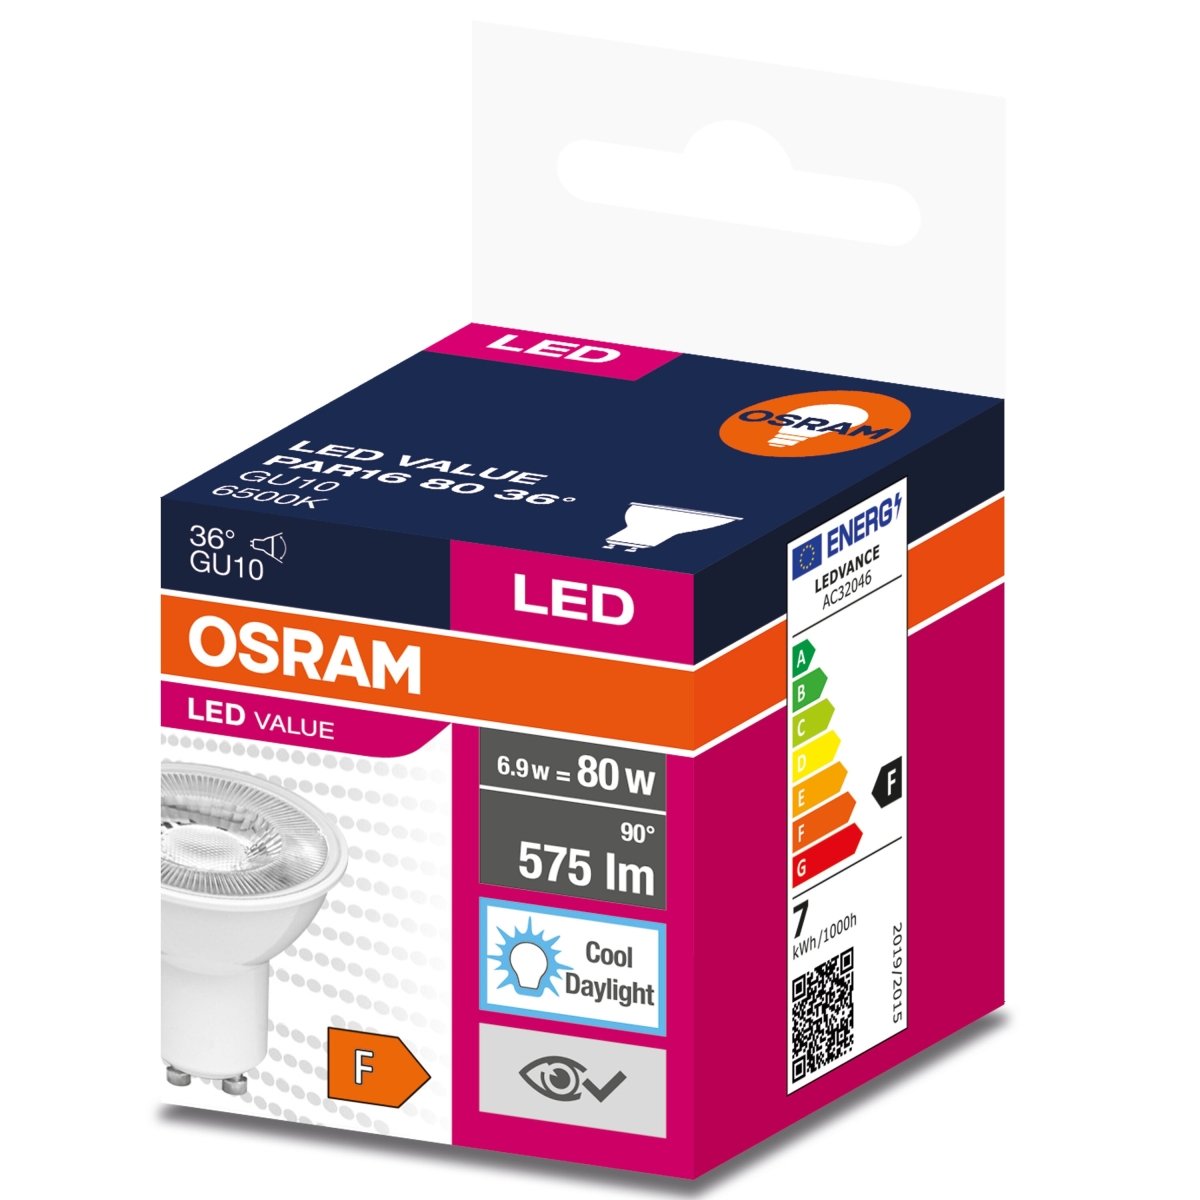 Żarówka LED GU10 6,9W LED VALUE OSRAM, odpowiednik 80W, 36 st., barwa zimna, 1 szt. - eshop LEDVANCE 4058075198821